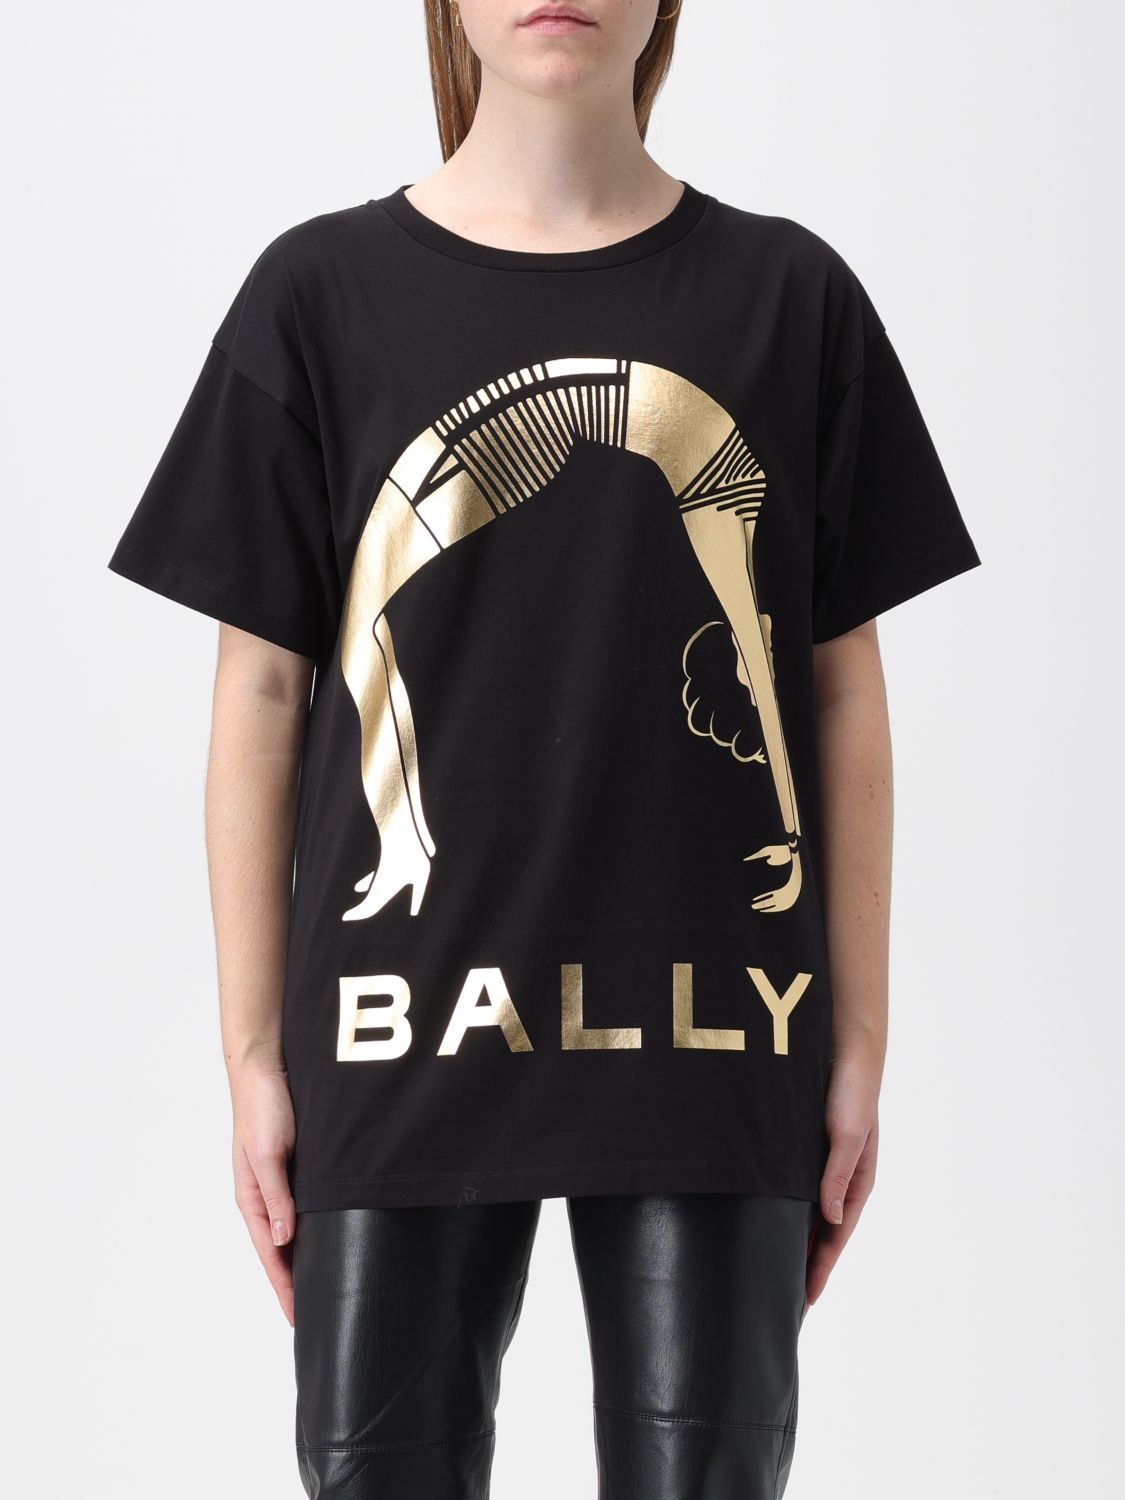 BALLY: t-shirt for woman - Black | Bally t-shirt MJE03ECO018 online on ...